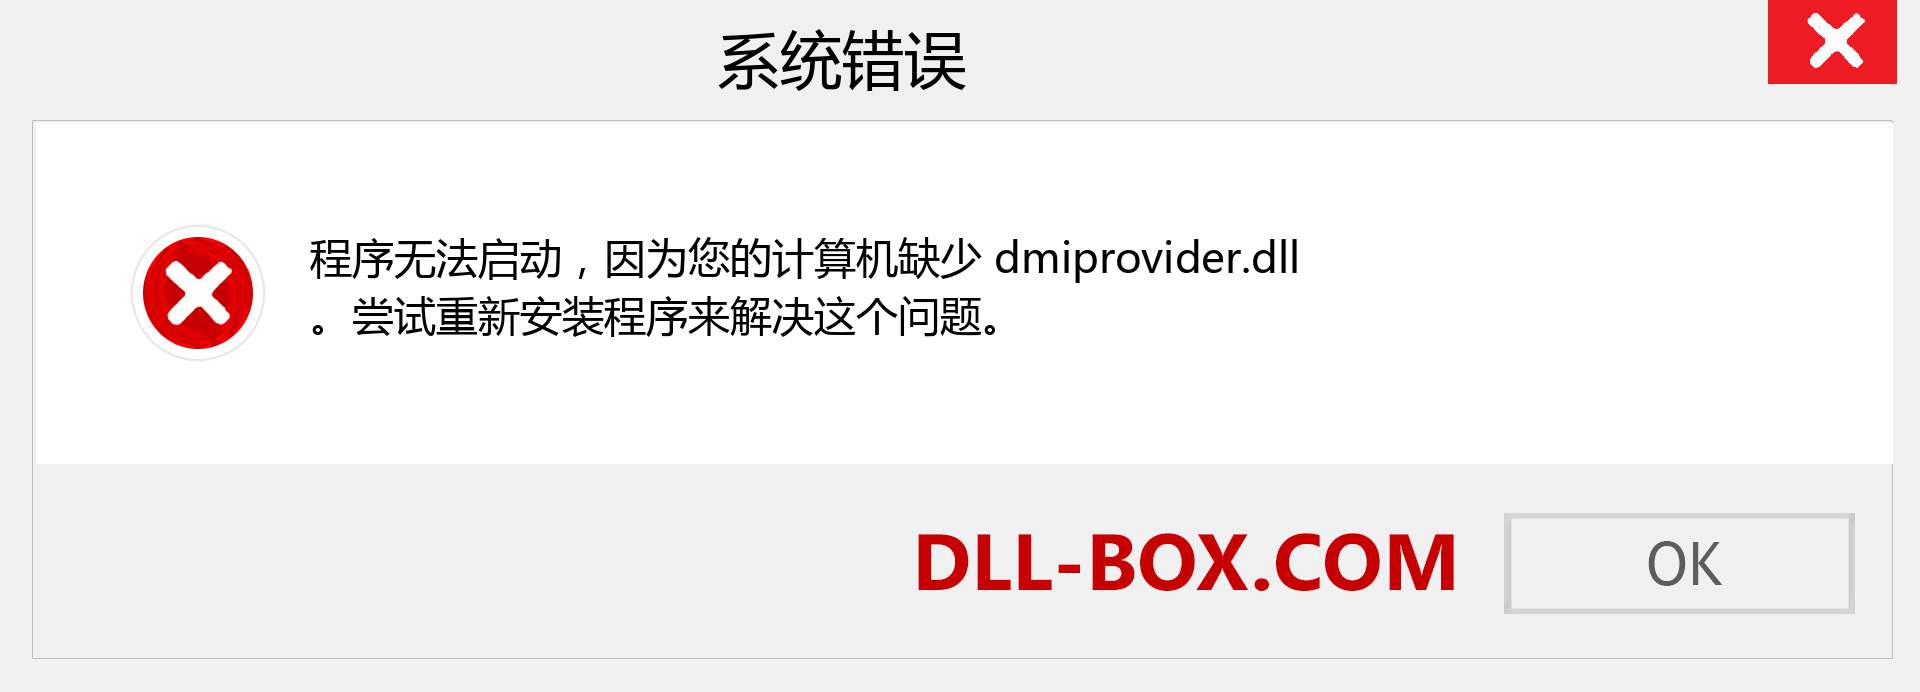 dmiprovider.dll 文件丢失？。 适用于 Windows 7、8、10 的下载 - 修复 Windows、照片、图像上的 dmiprovider dll 丢失错误